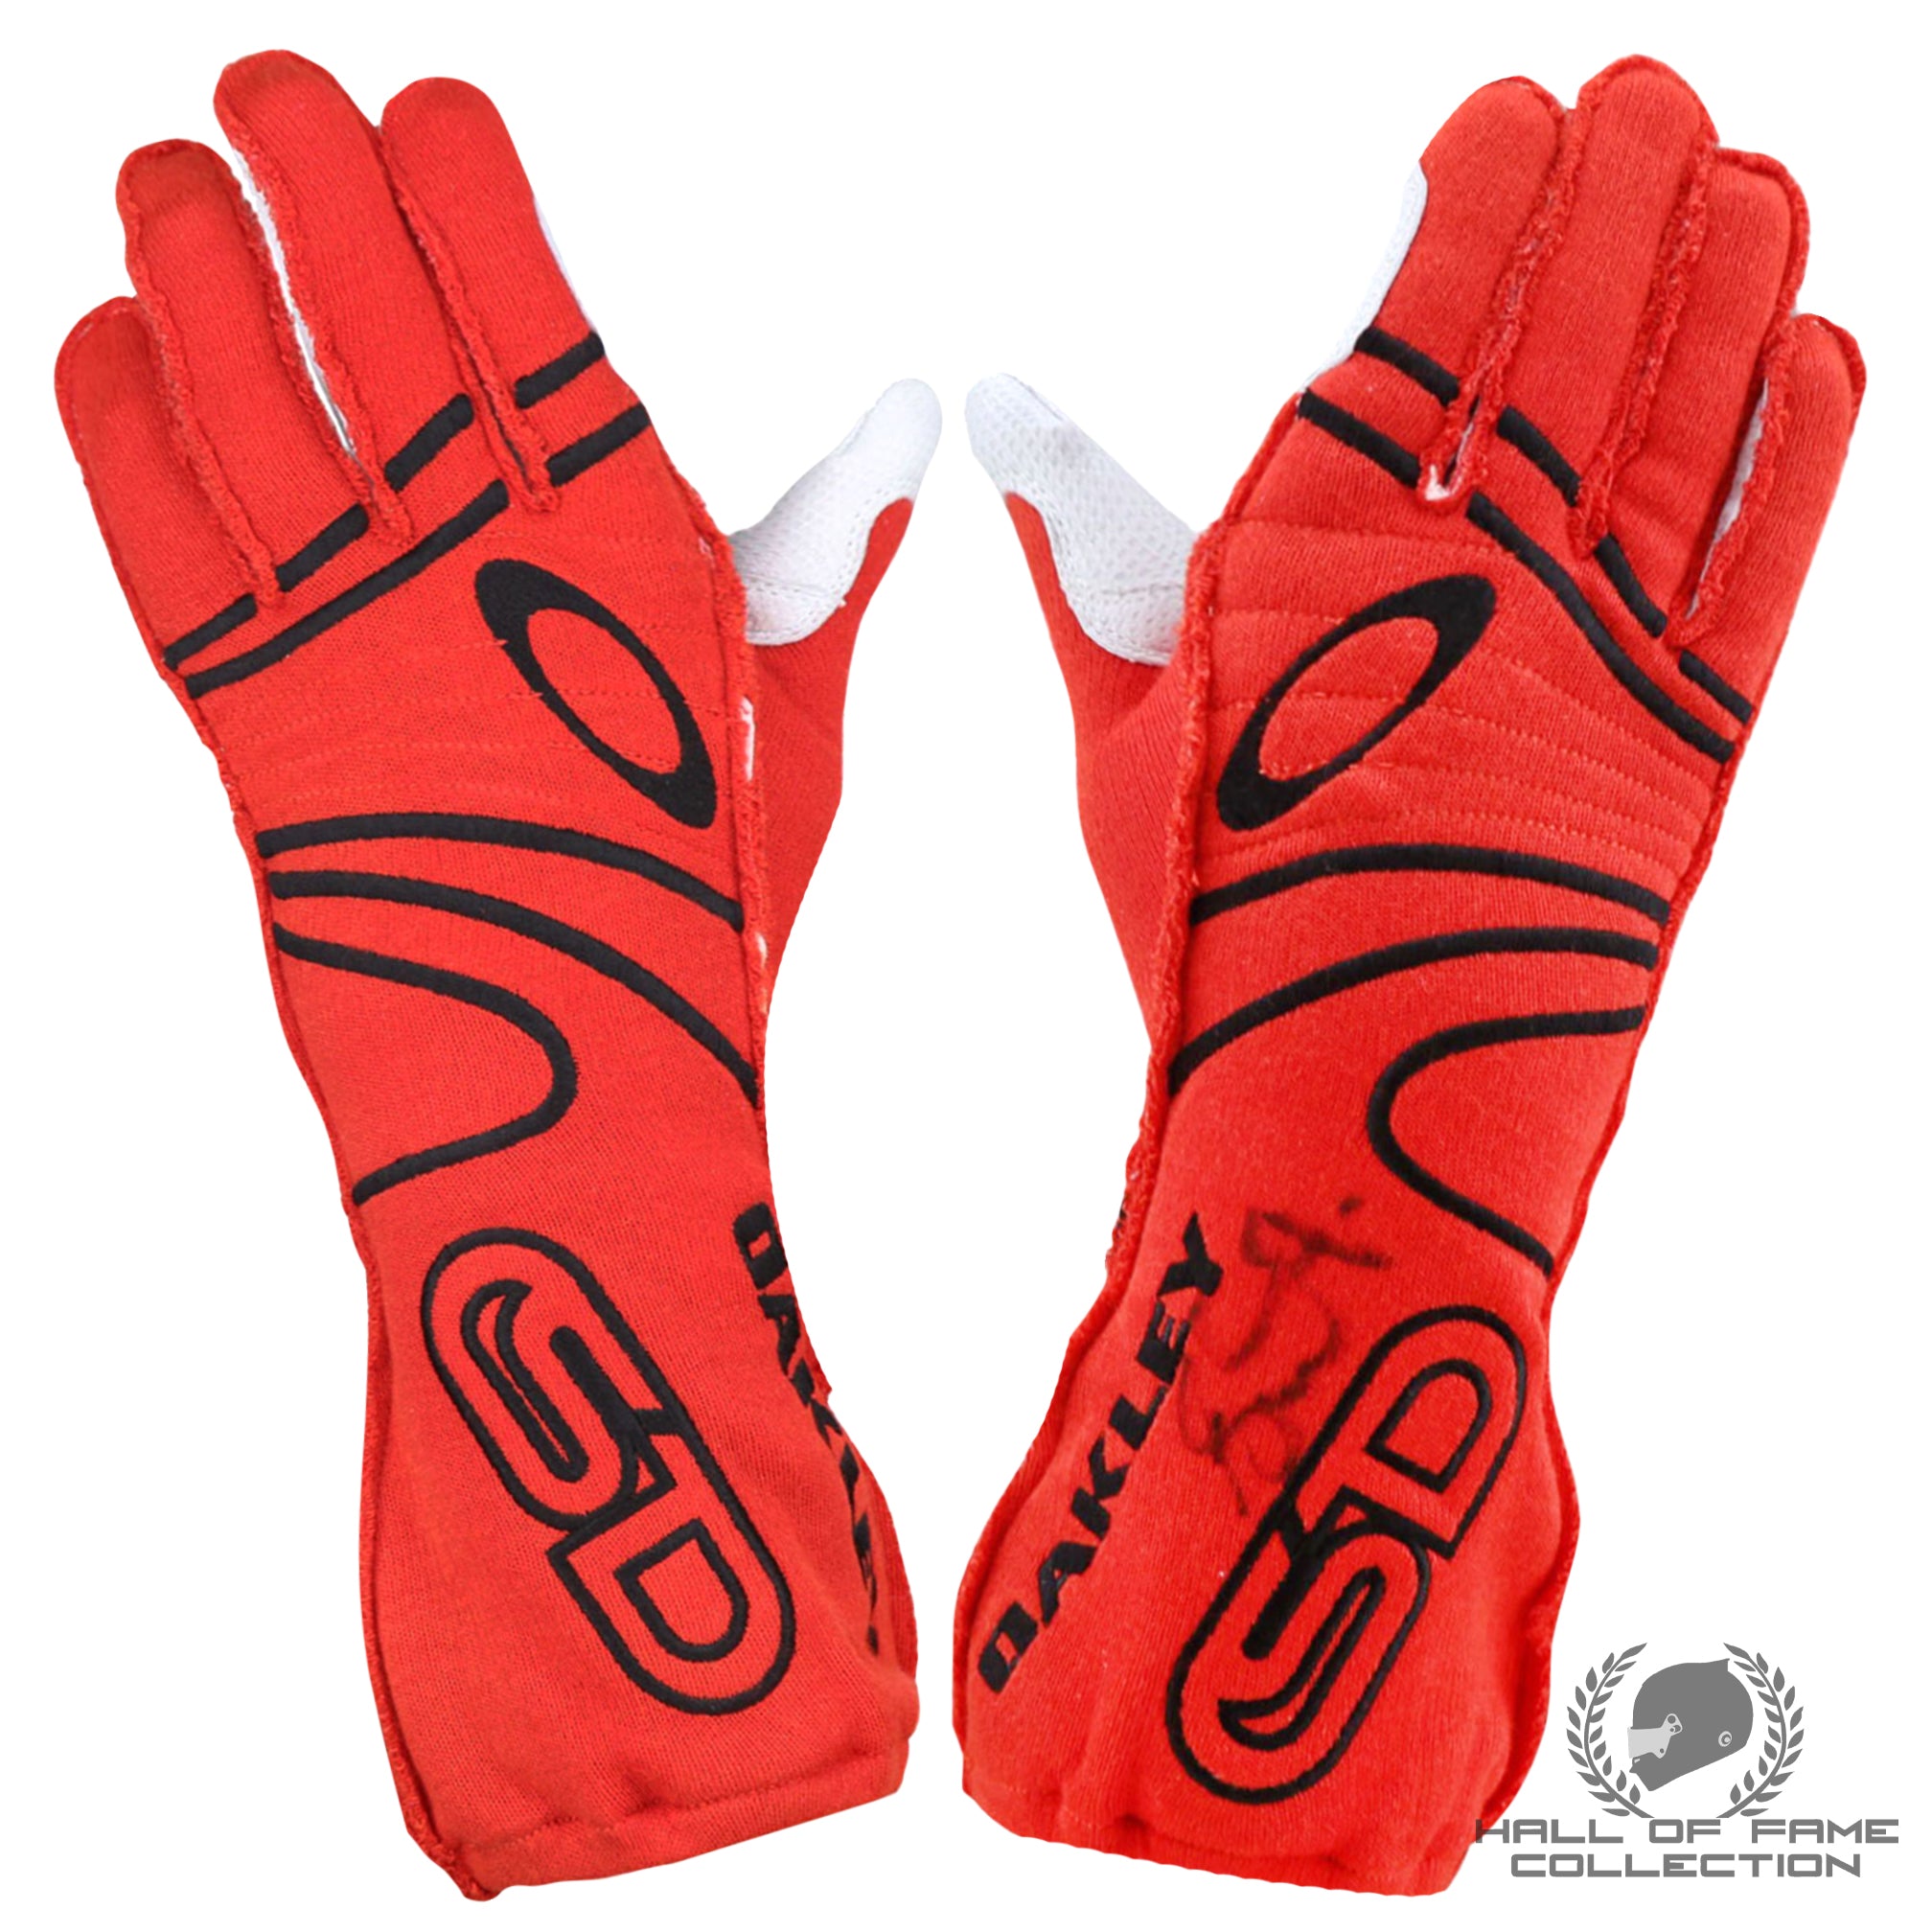 2014 Scott Dixon Signed Original Chip Ganassi Racing IndyCar Gloves